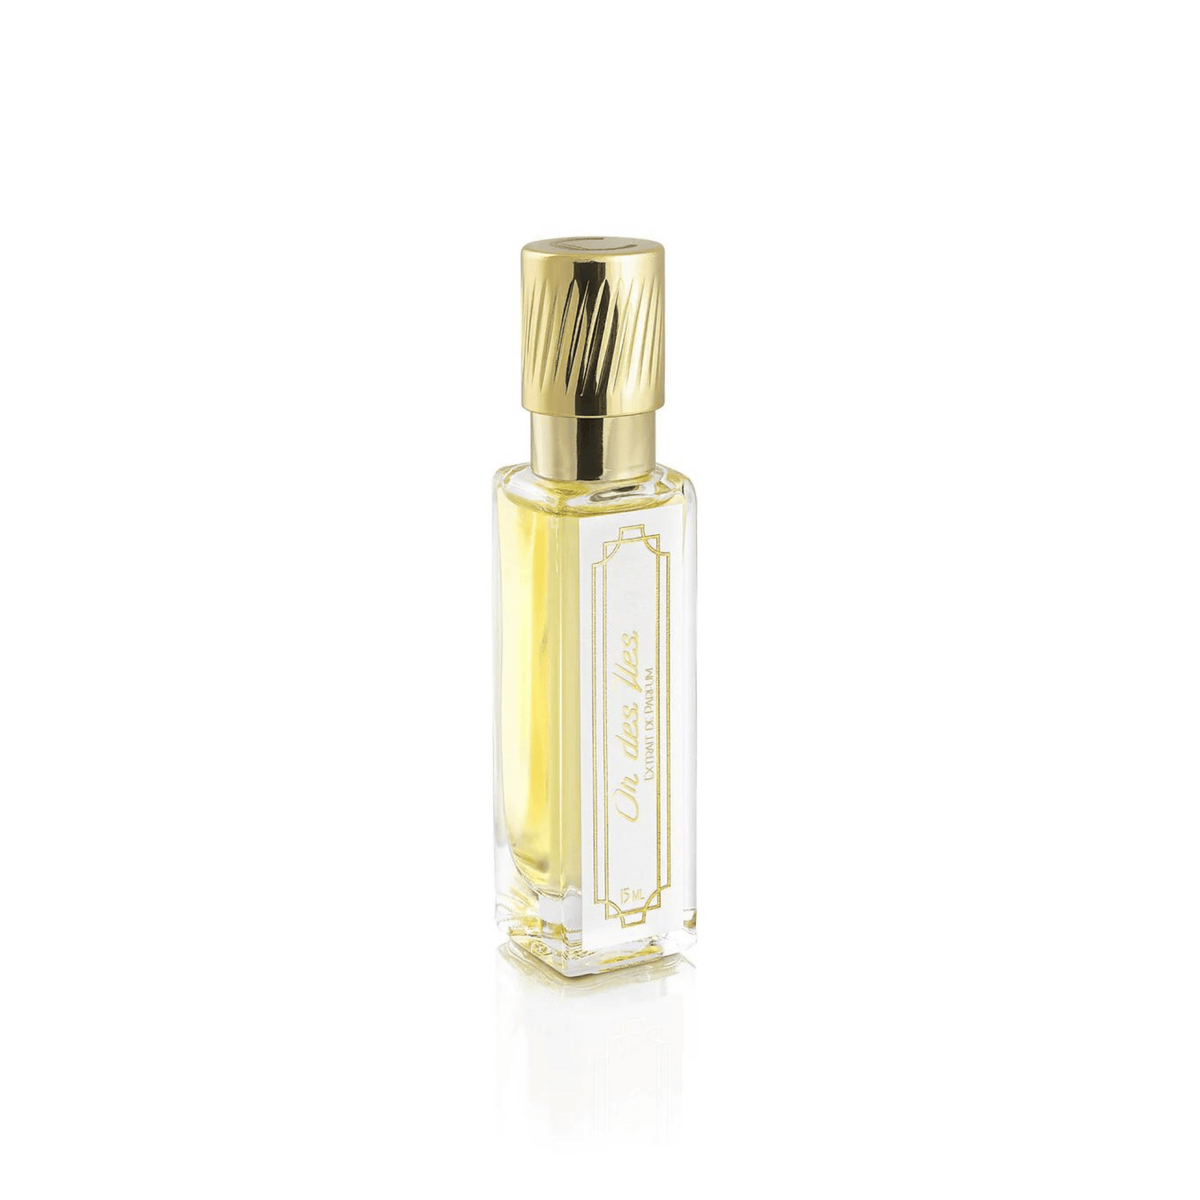 Primary Image of Or des Iles Extrait de Parfum